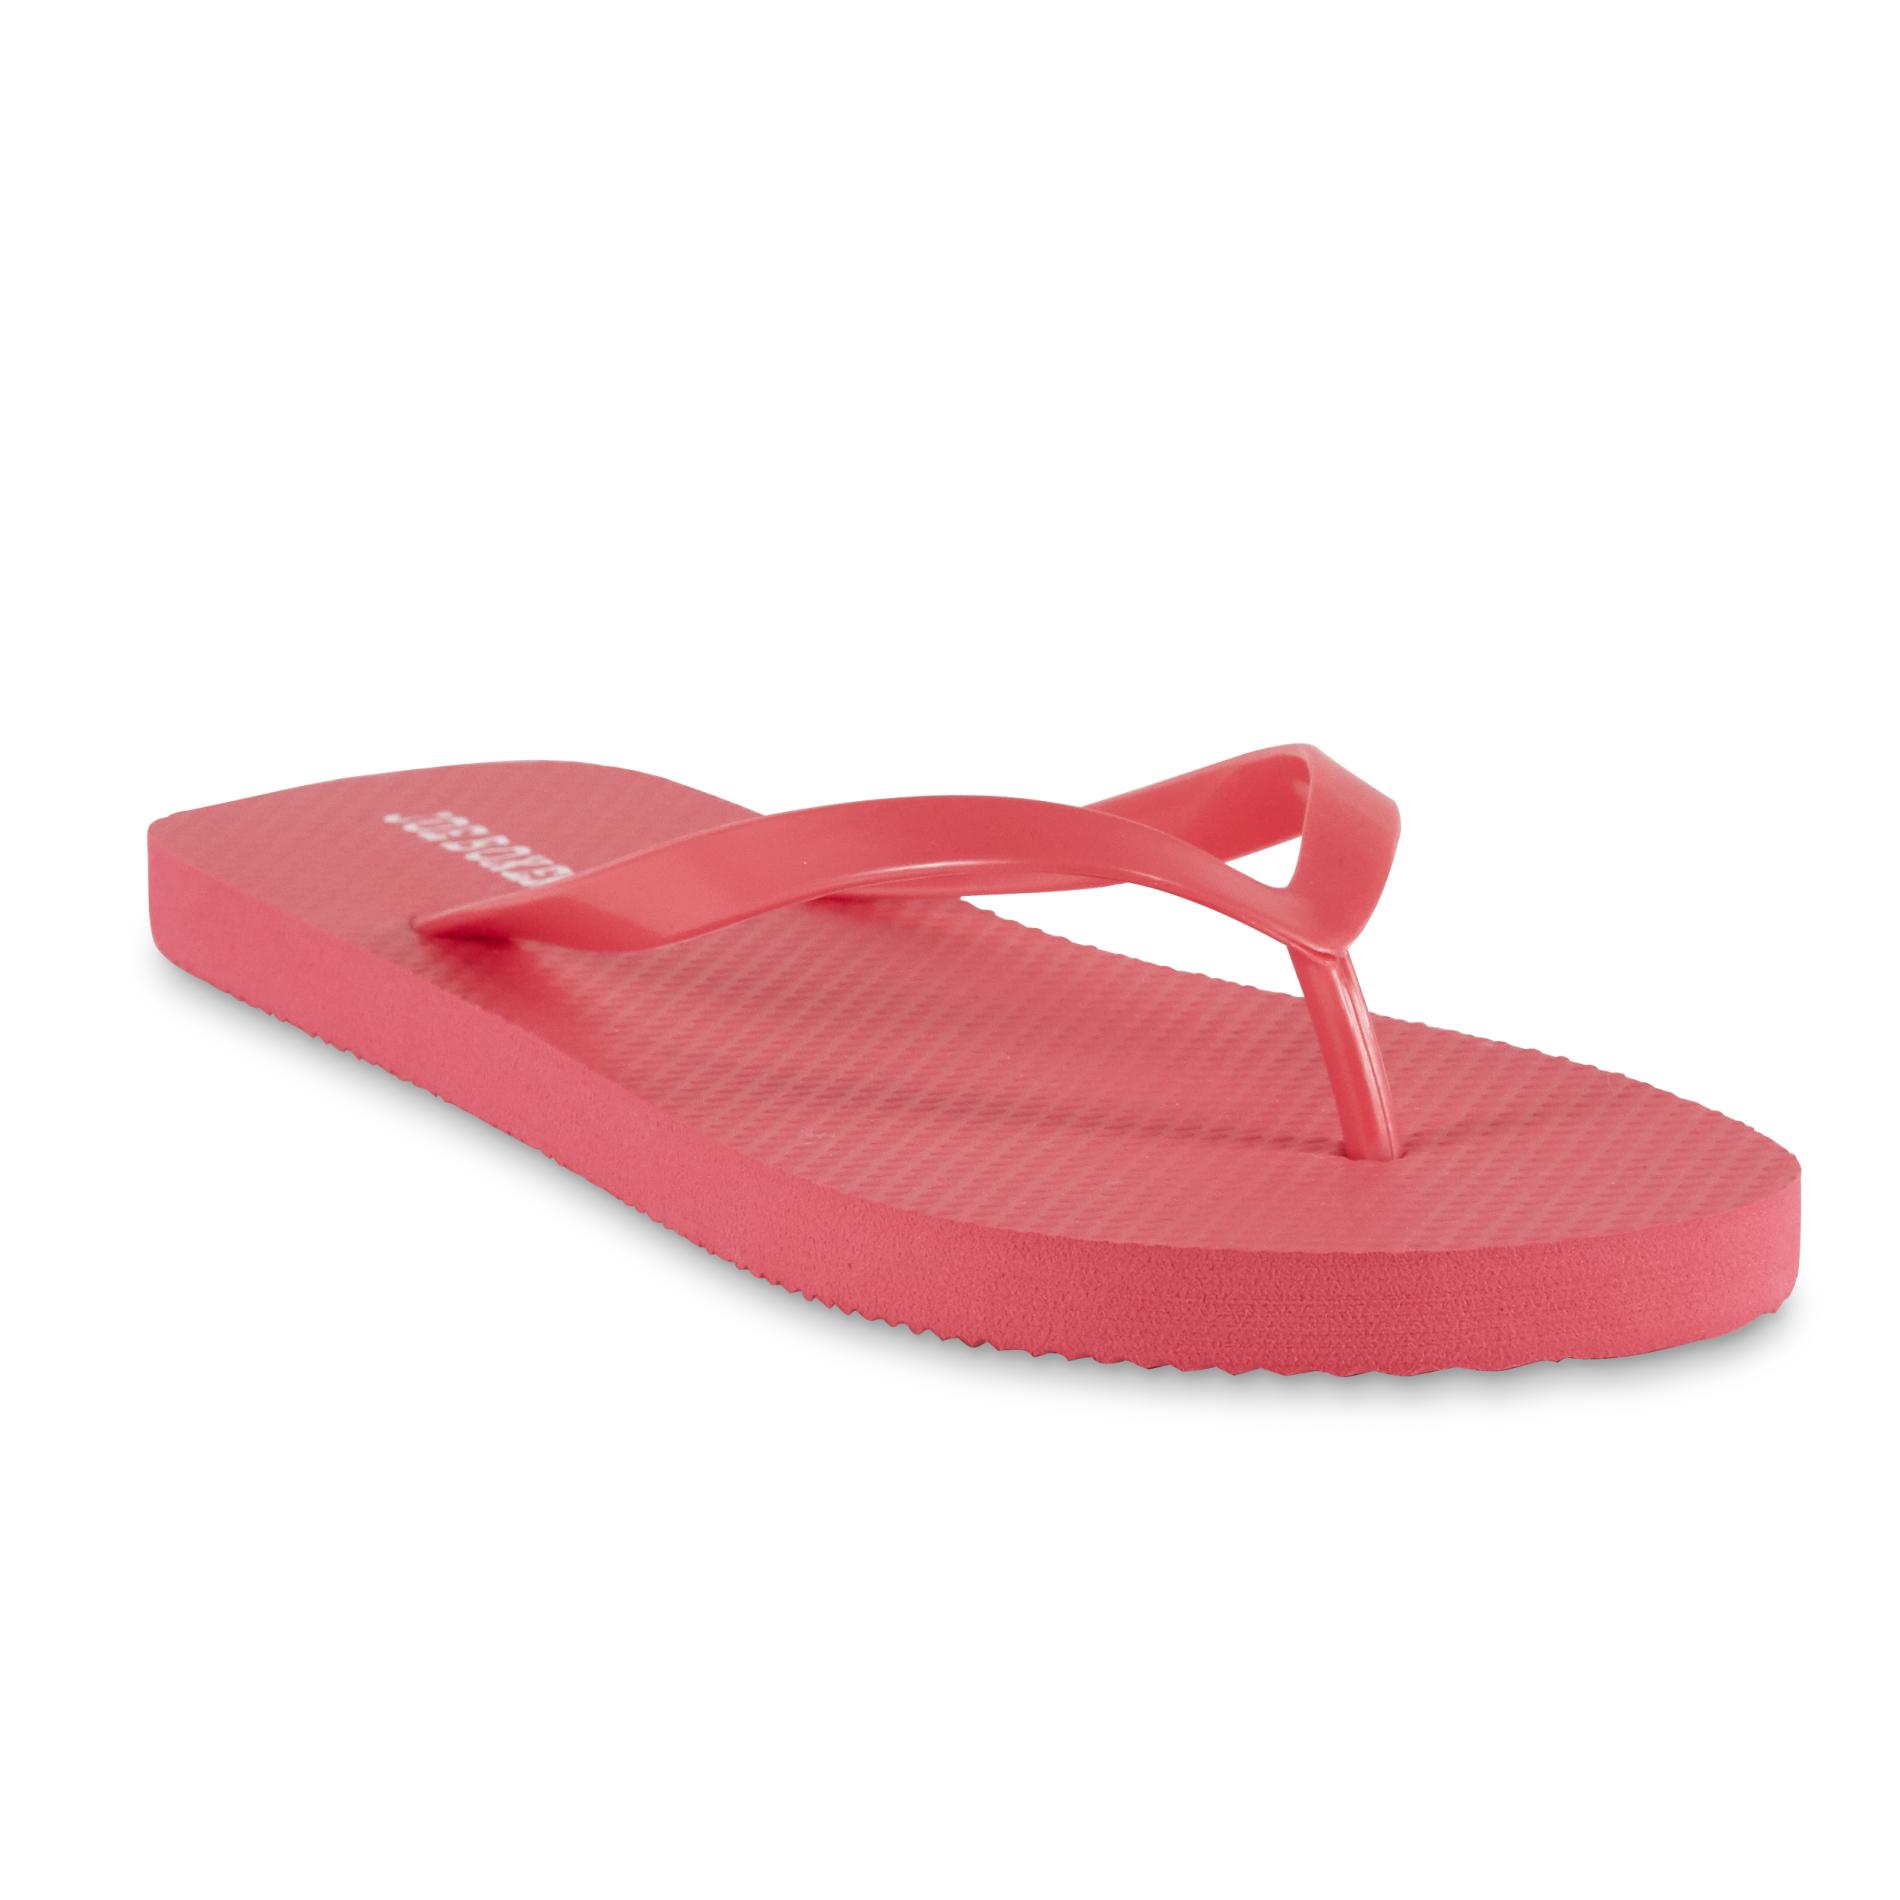 Joe Boxer Women's Carynn Flip-Flop Sandal - Raspberry